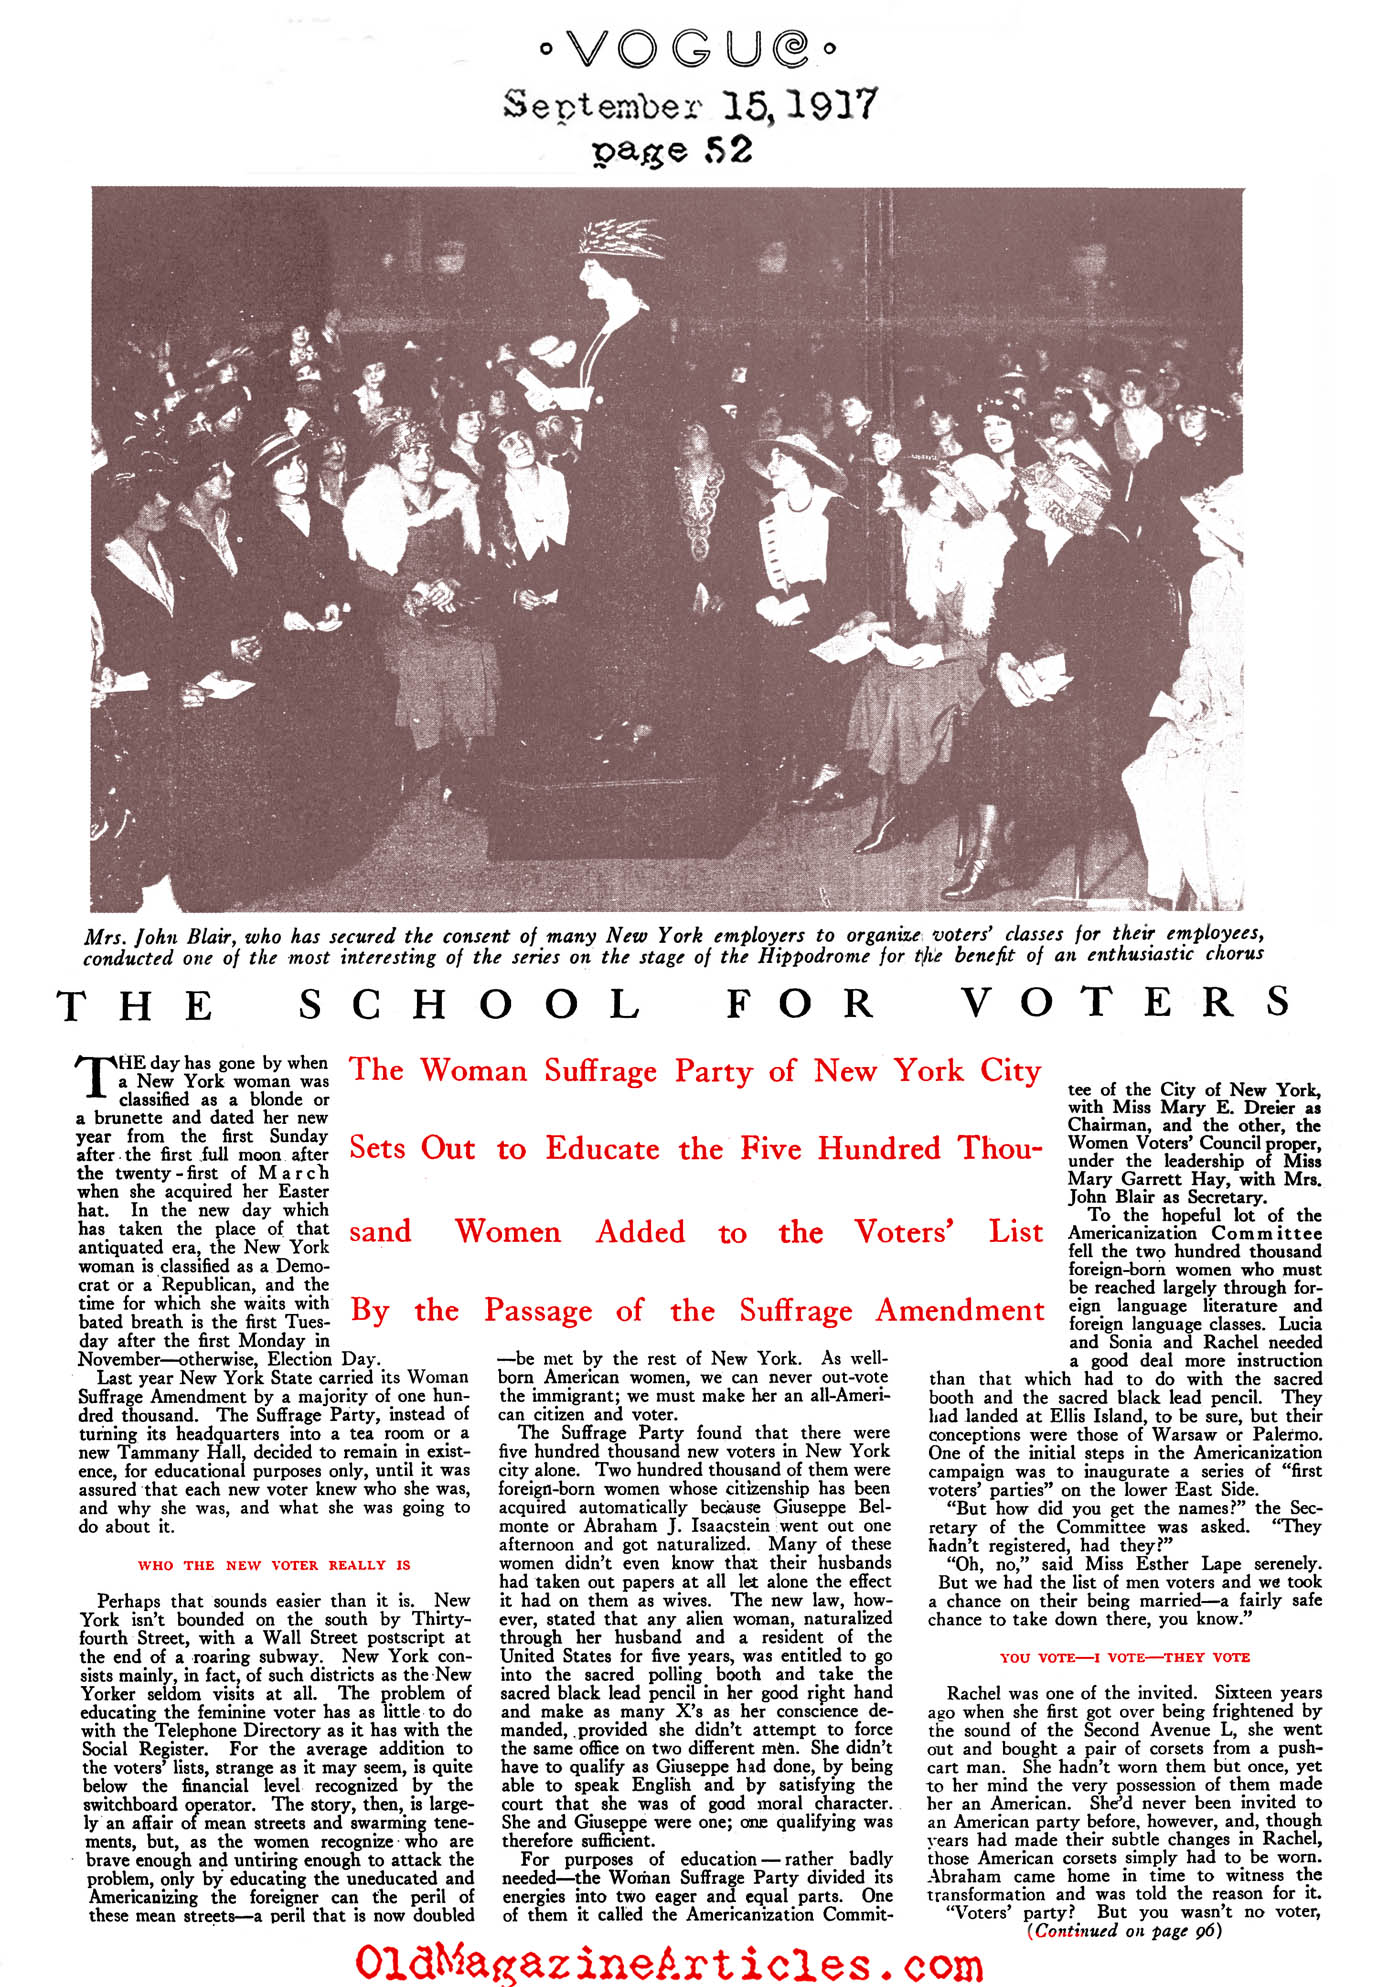 Getting the Immigrant Vote  (Vogue Magazine, 1917)